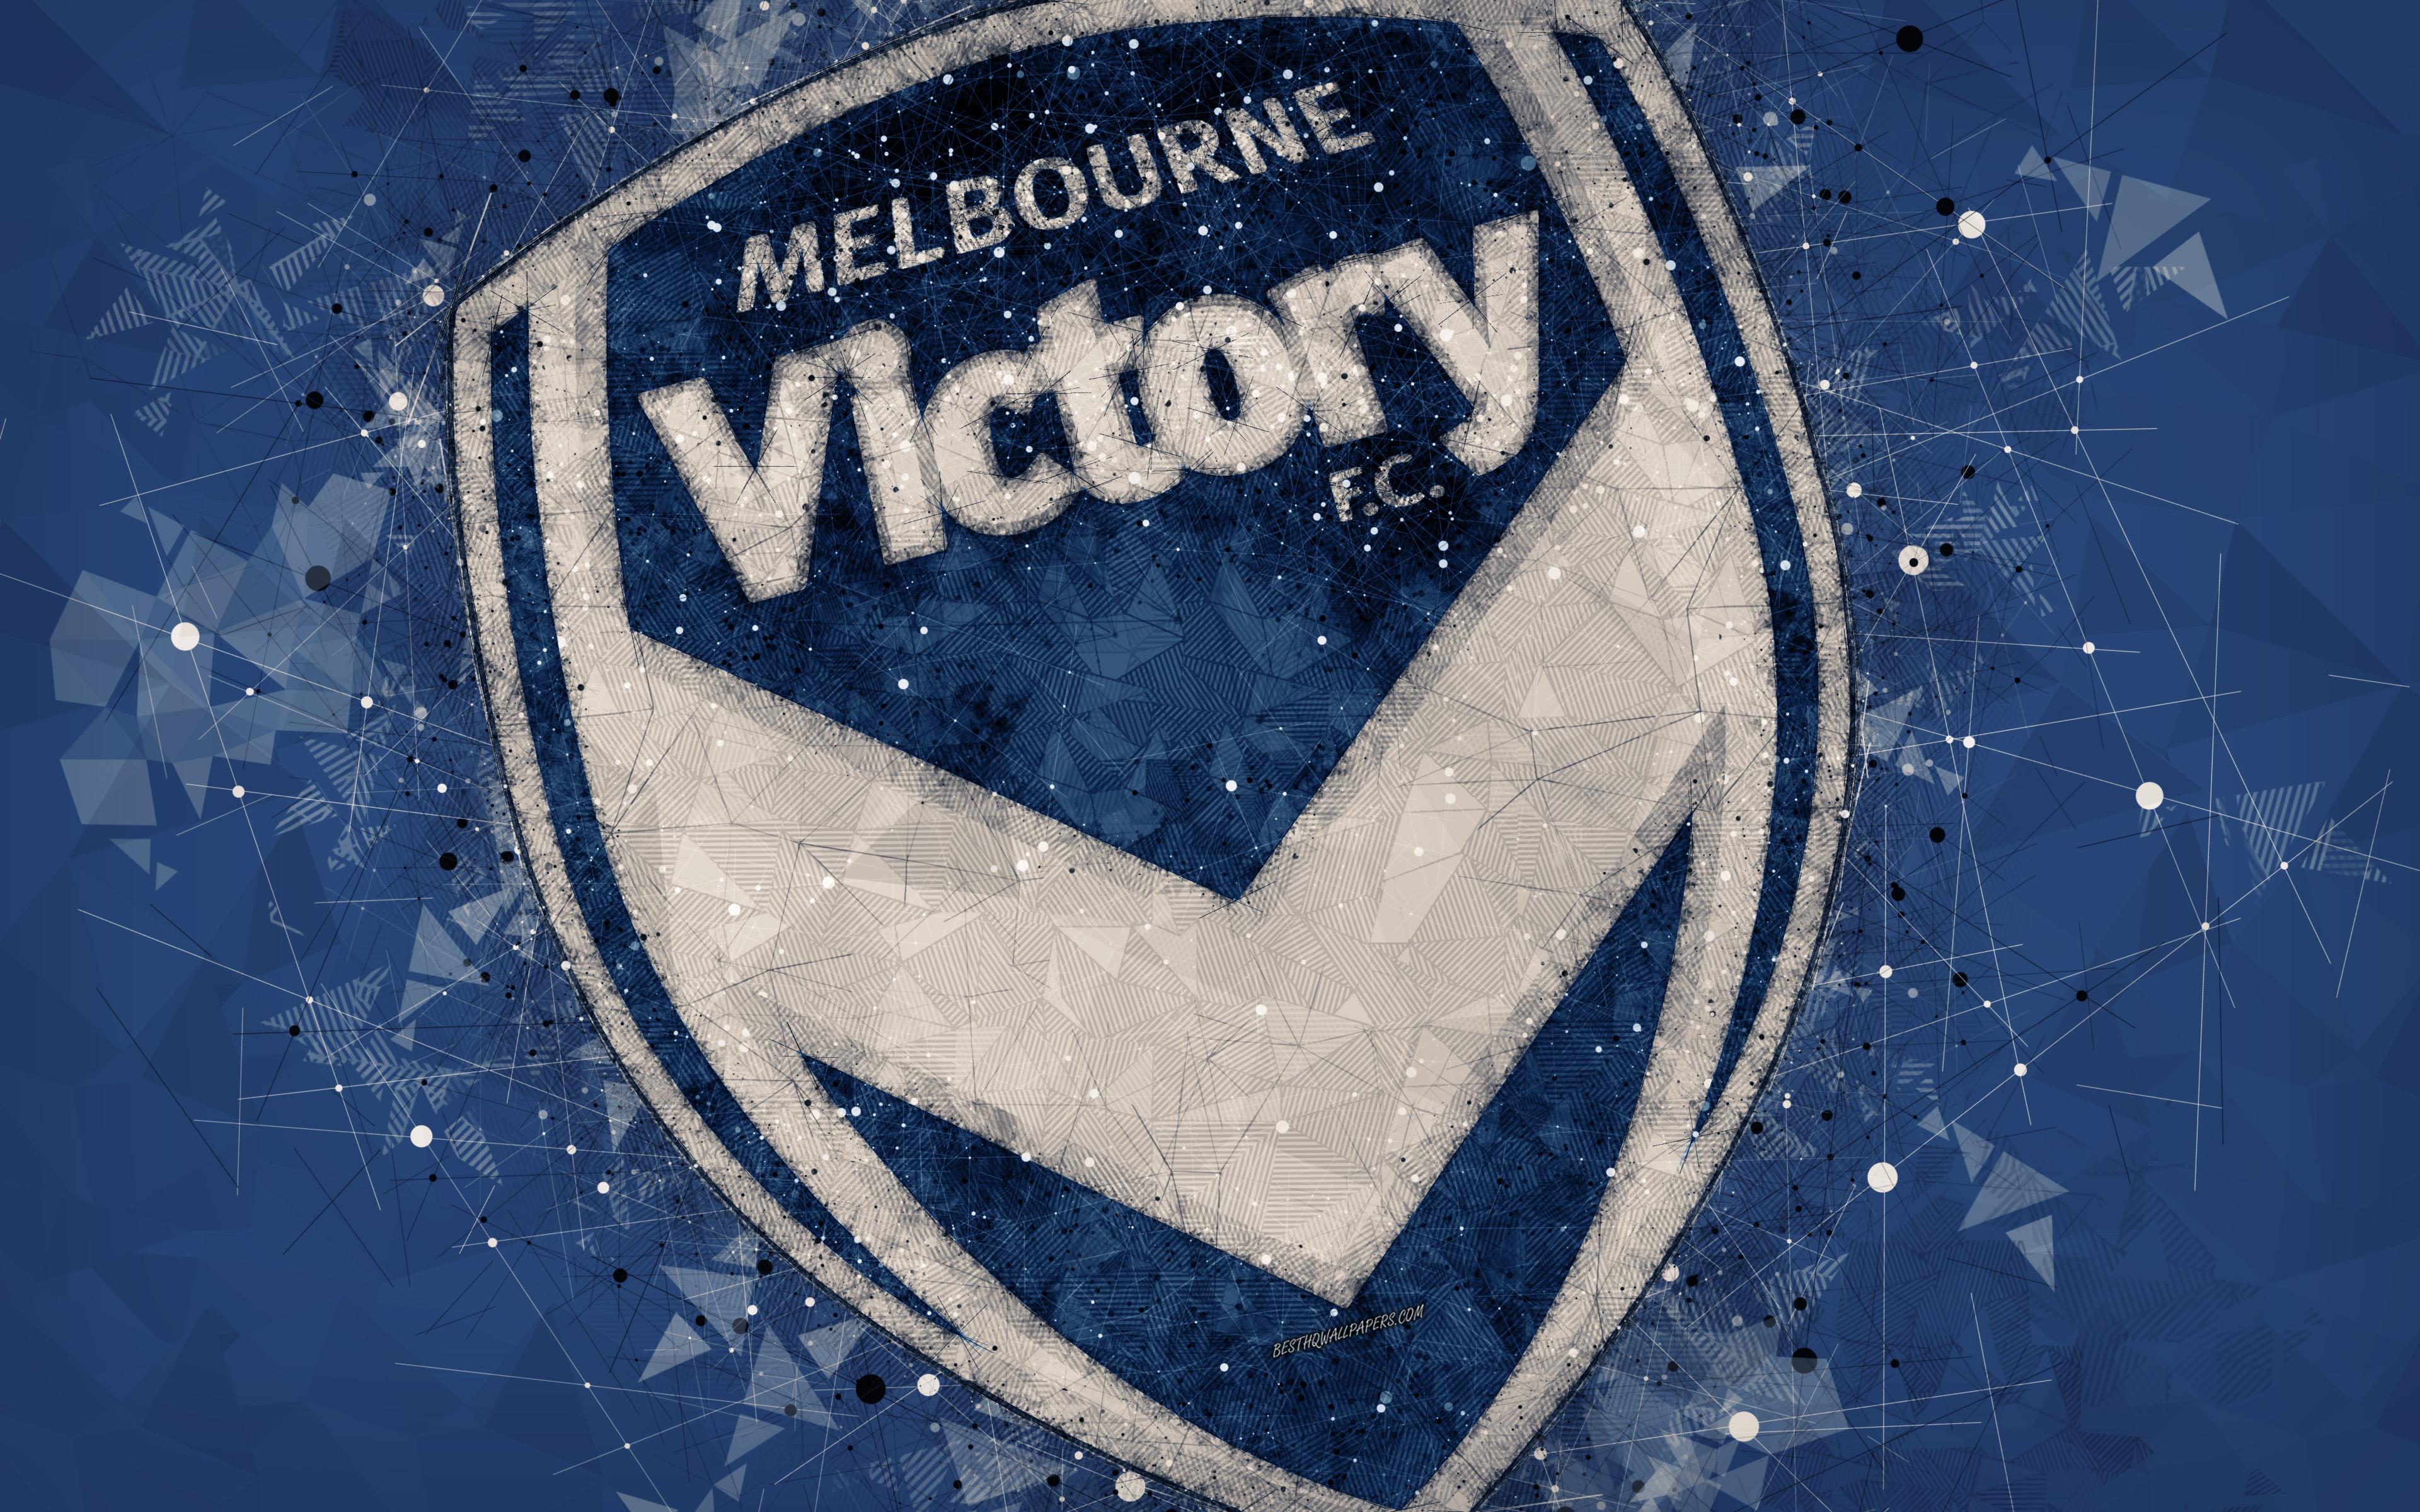 Melbourne Victory FC 4k Ultra HD Wallpaper. Background Image